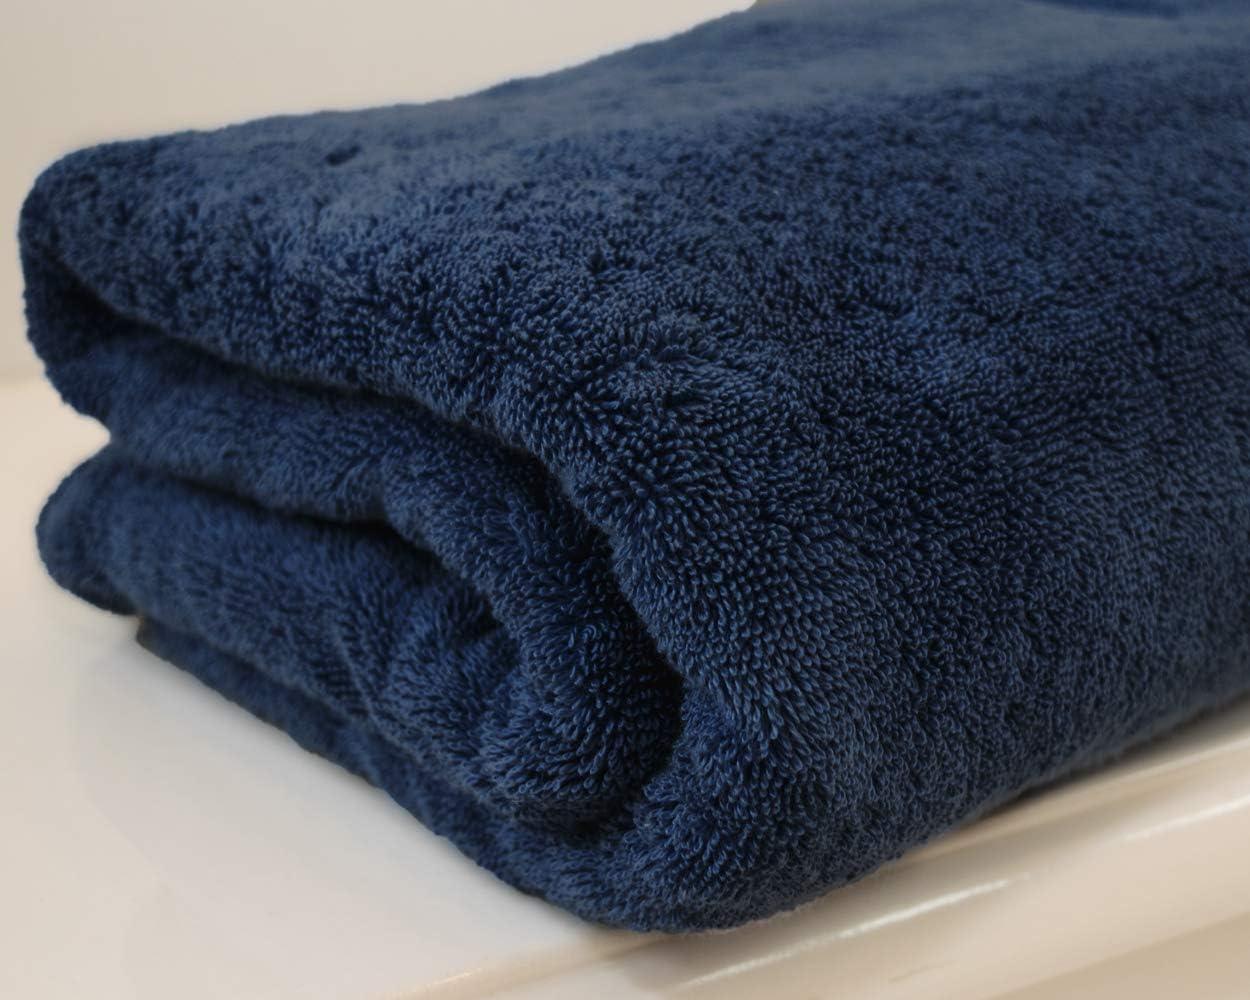 100% Cotton Bathroom Oversized Towels Sets of 3 Skin-Friendly 1 Large Bath  Towel 2